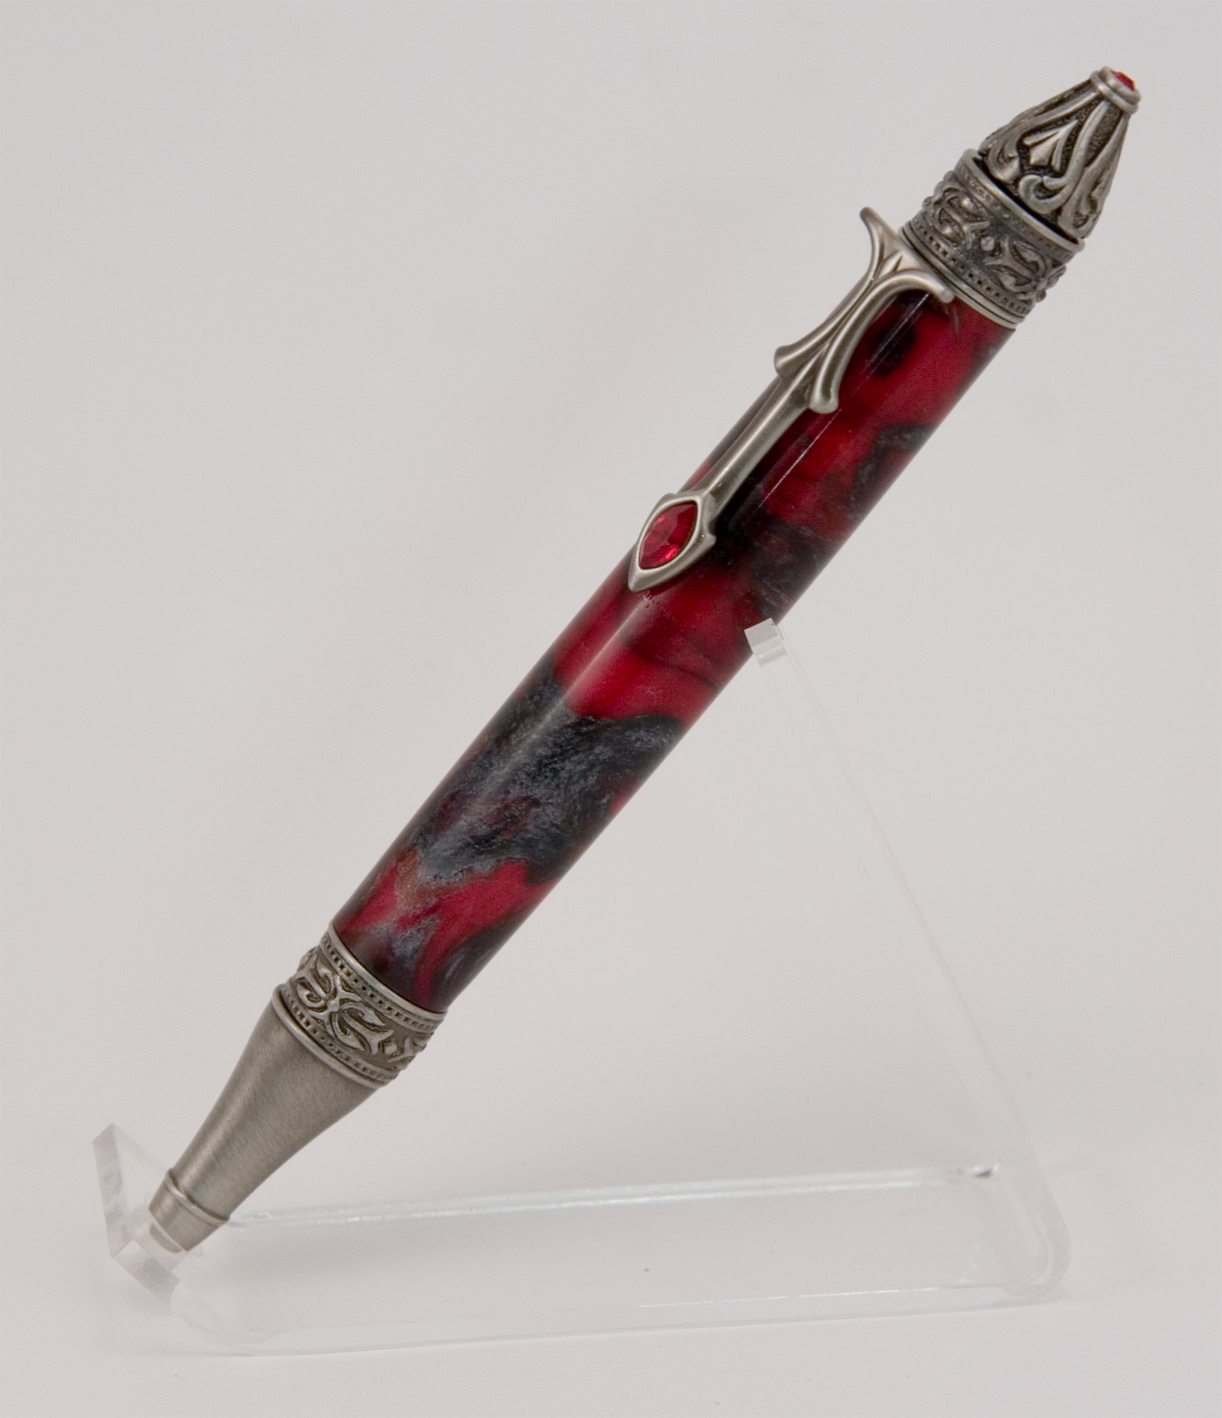 gothica pen